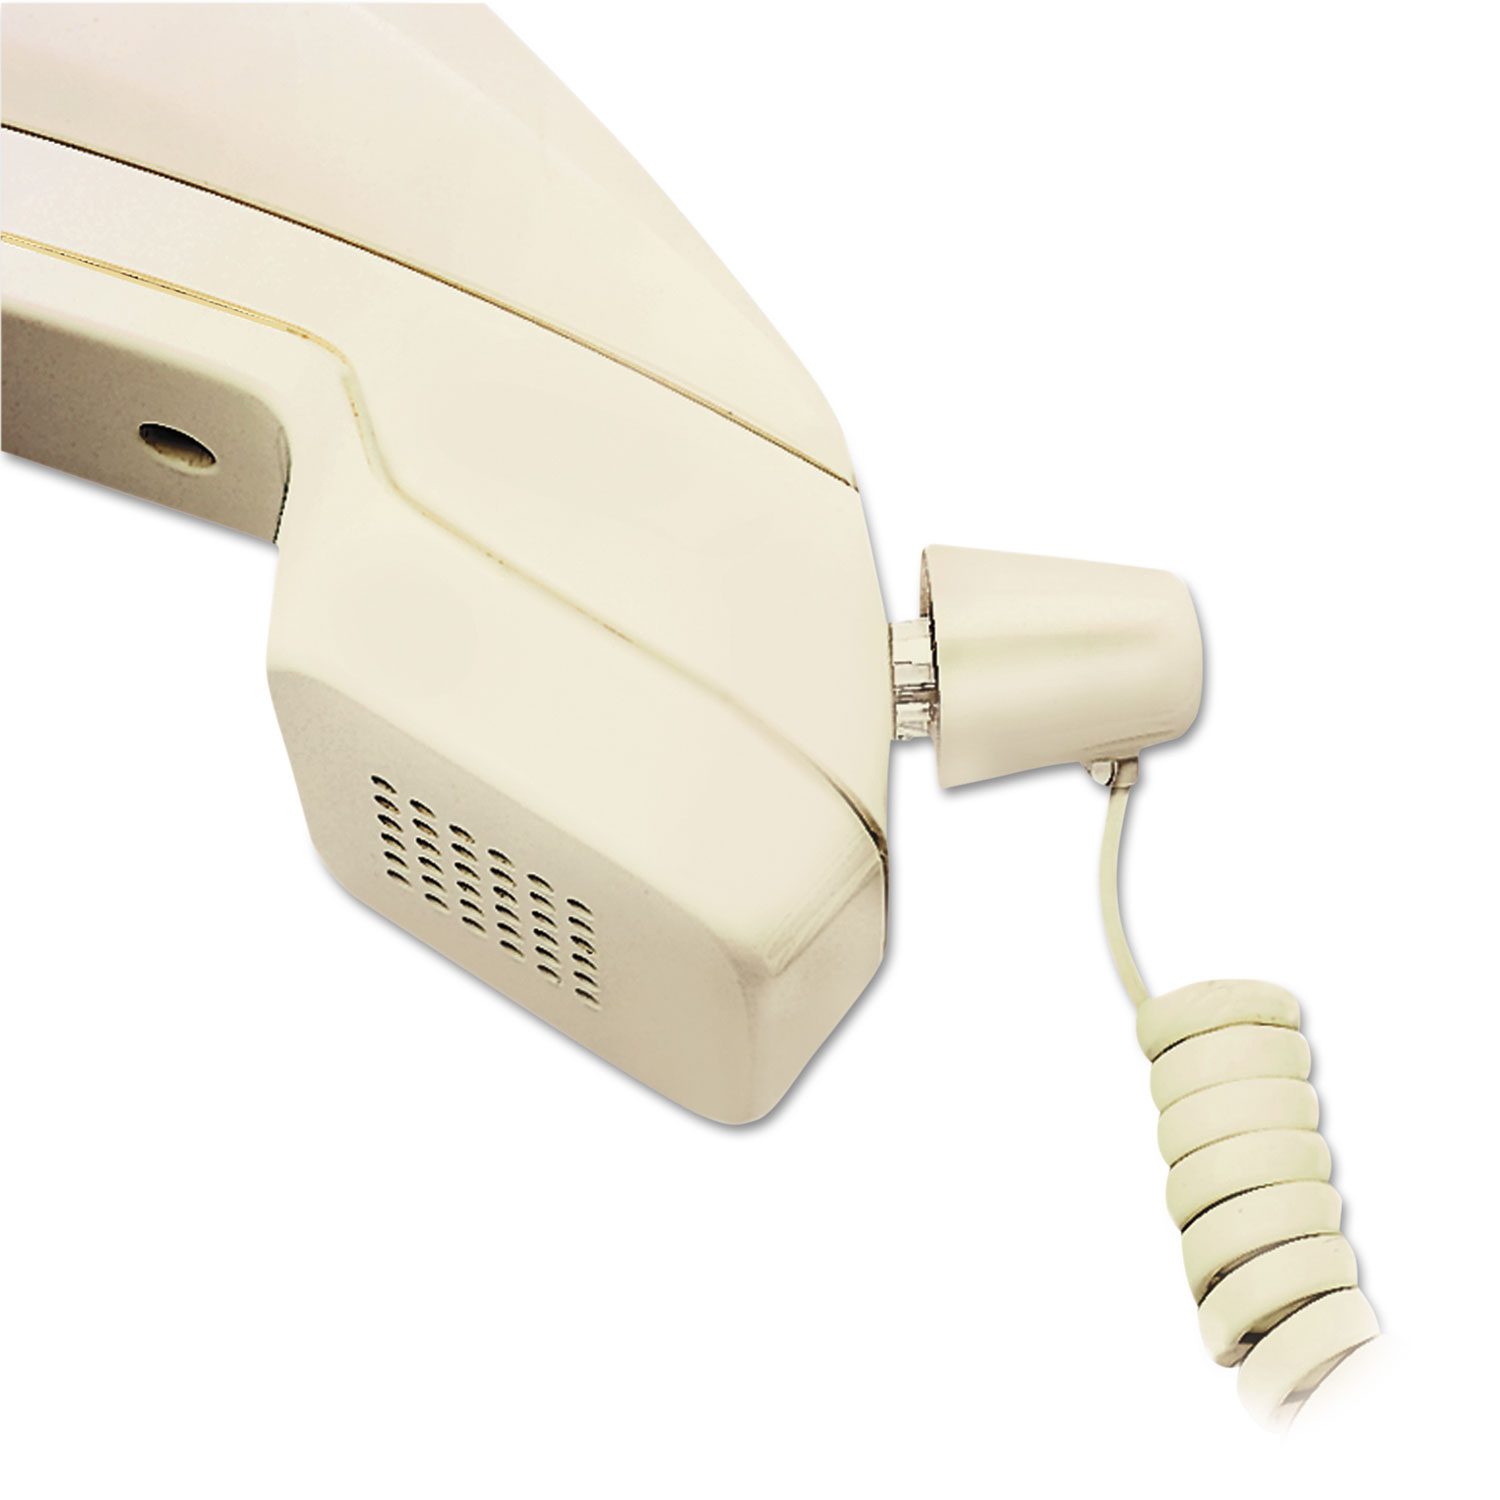 Twisstop Detangler w/Coiled, 25-Foot Phone Cord, Ivory